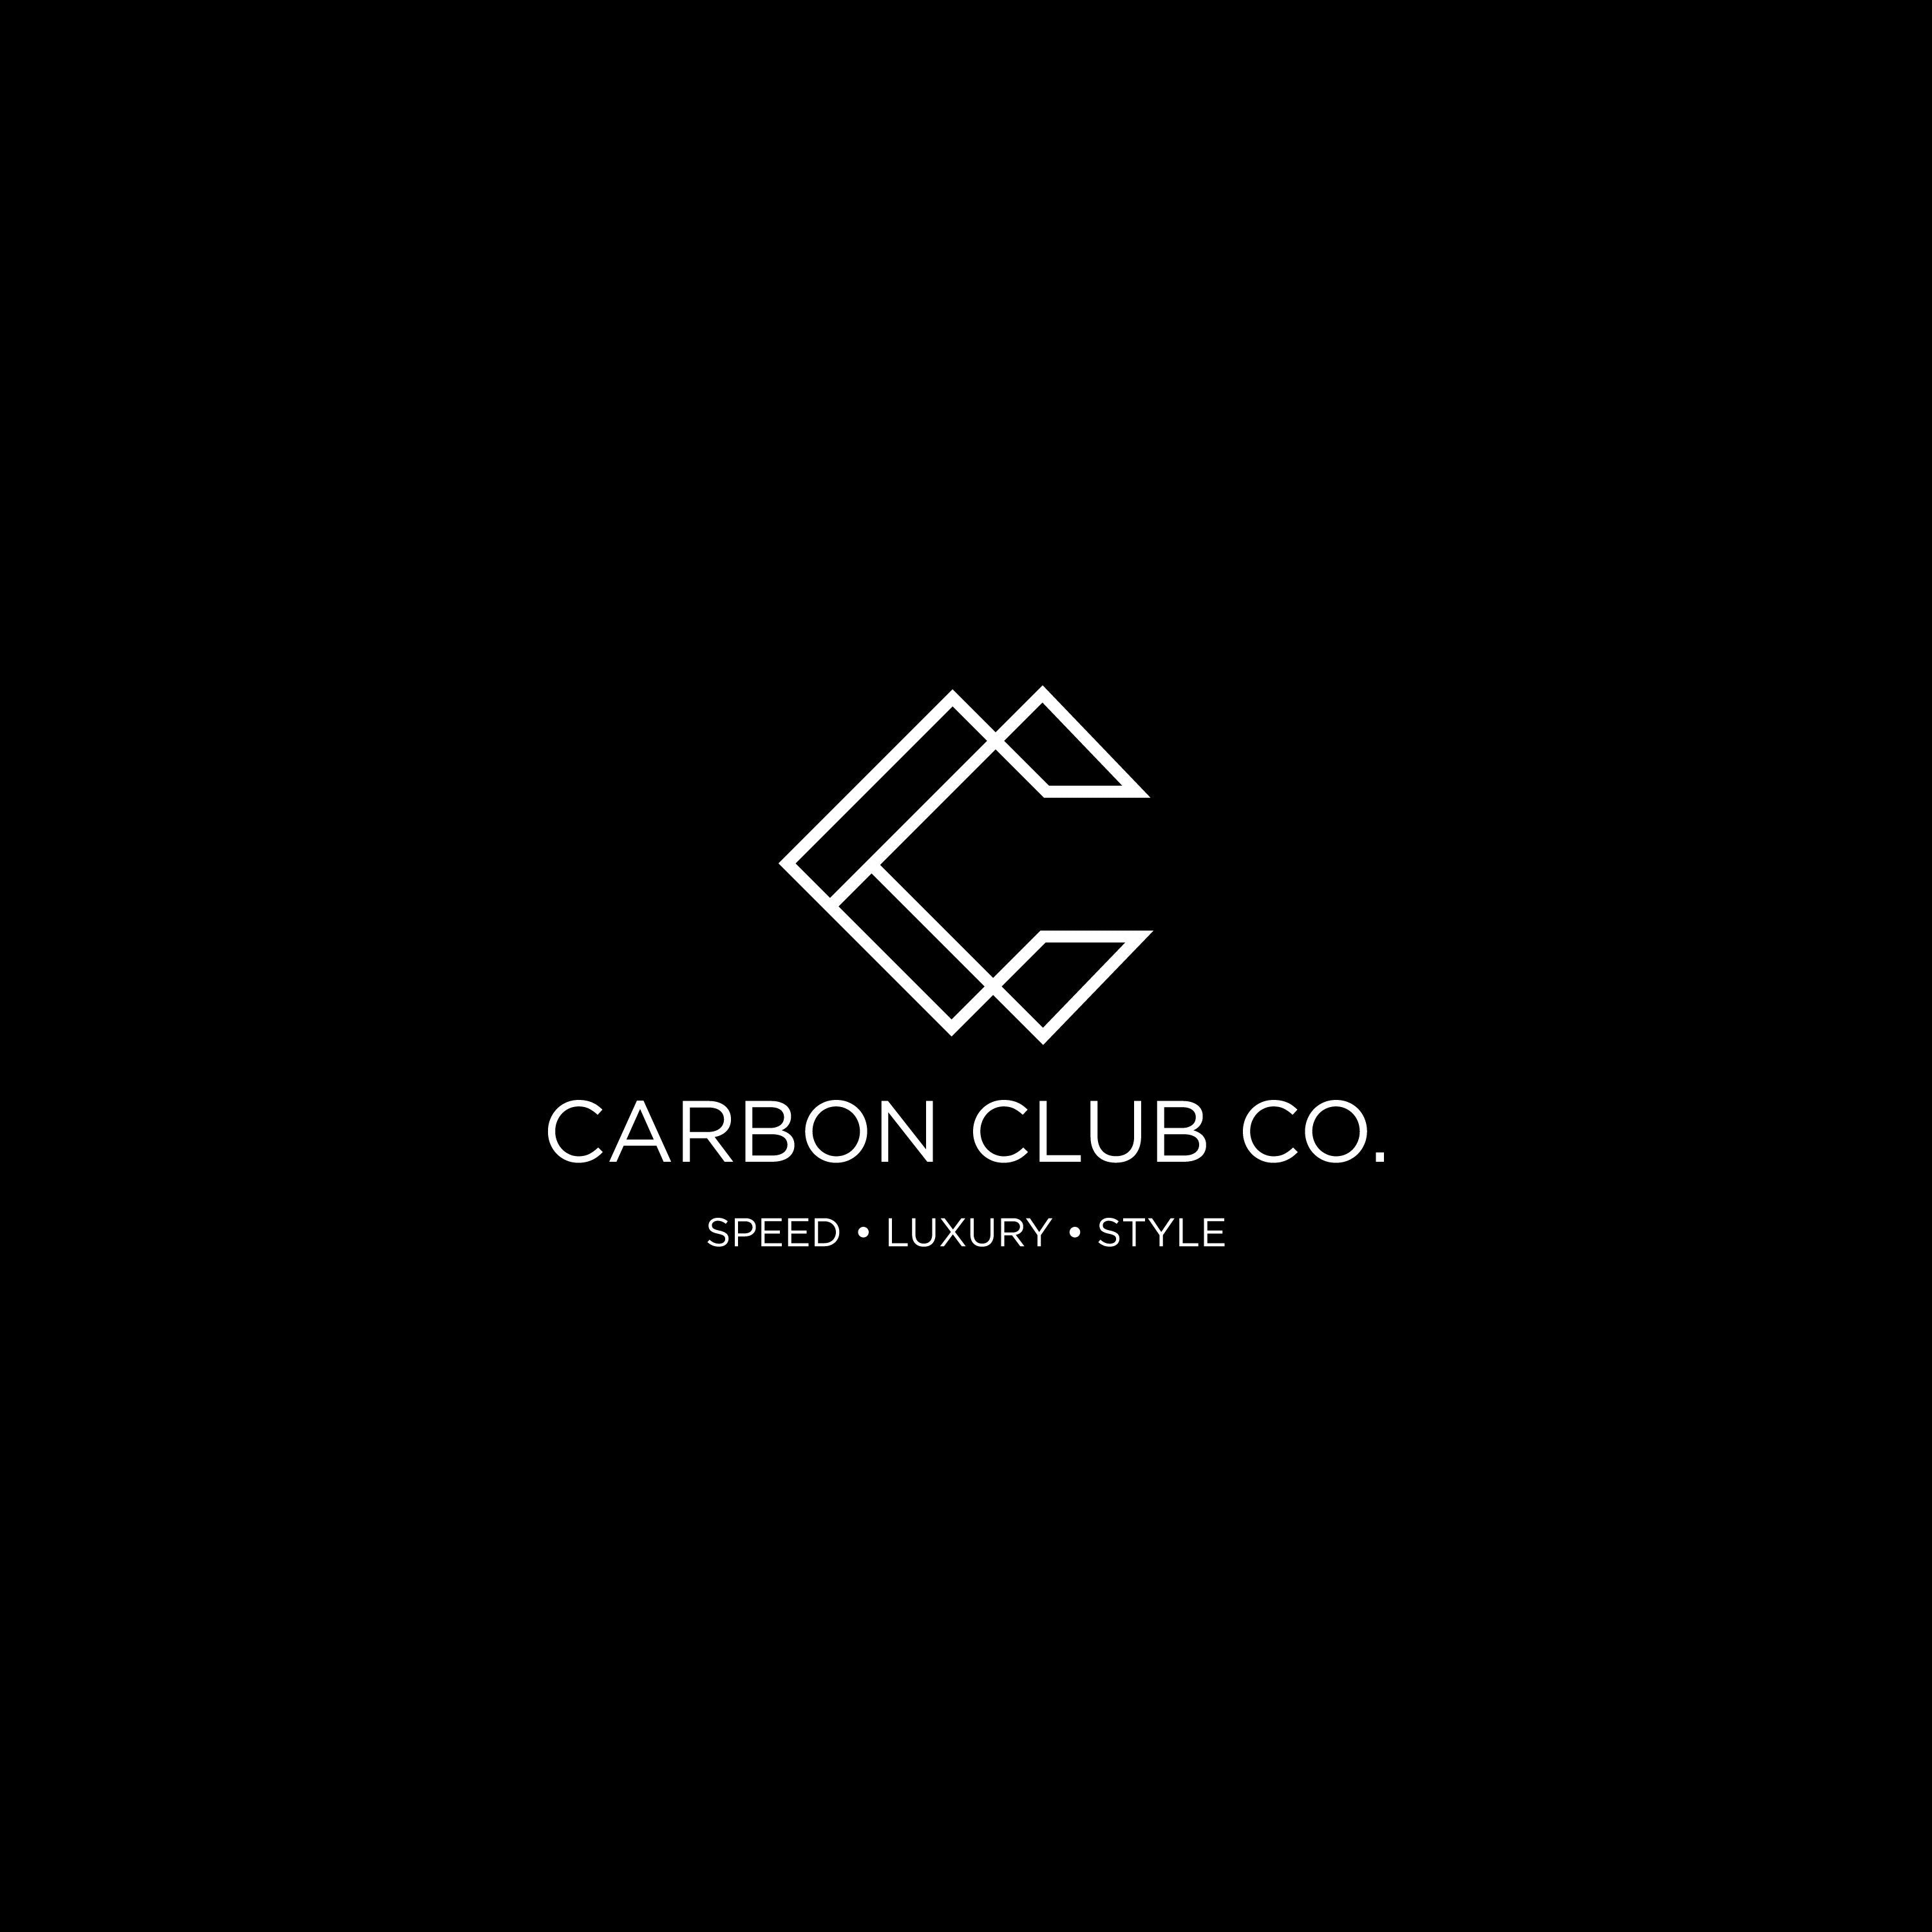 Carbon Club Co